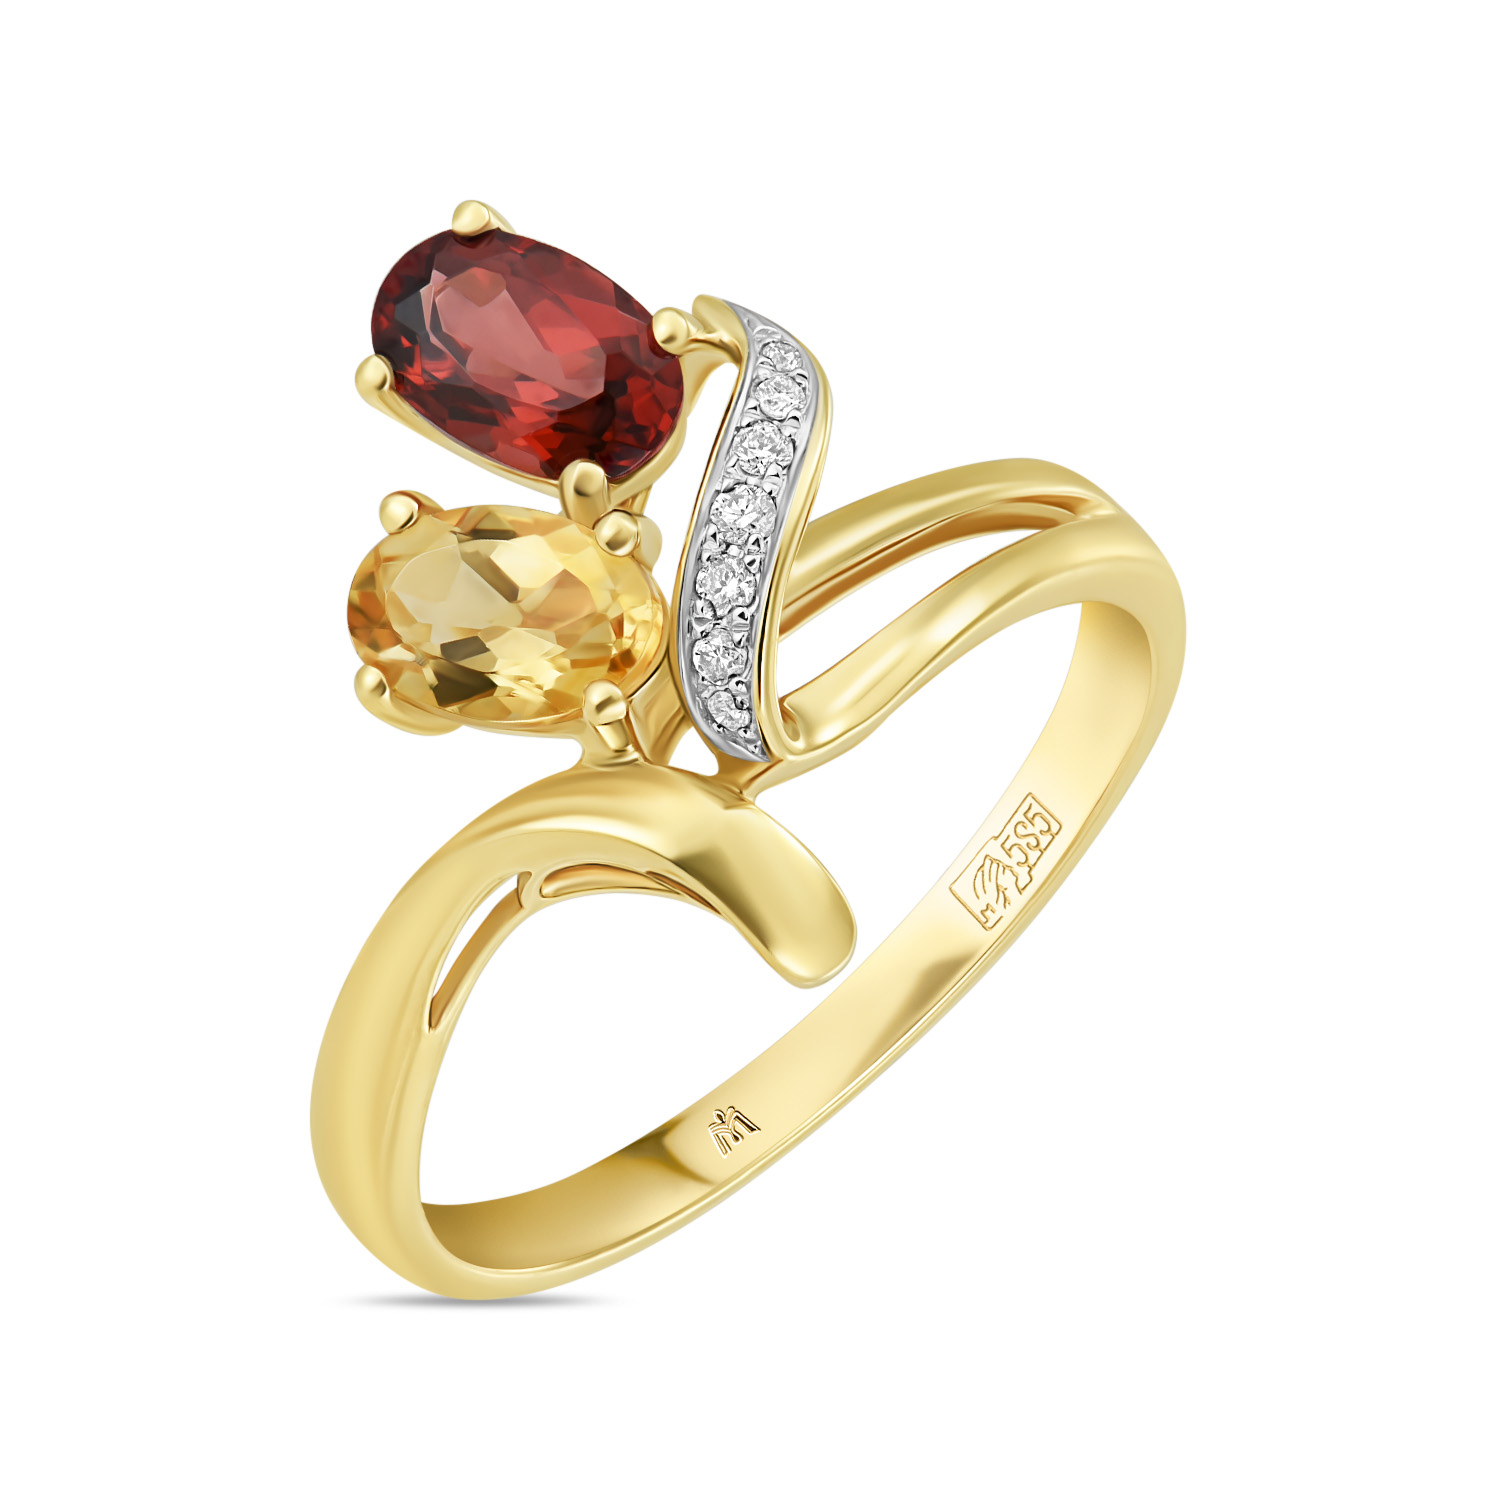 Кольца МЮЗ Золотое кольцо с цитрином, бриллиантами и гранатом кольца мюз золотое кольцо с цитрином и бриллиантами